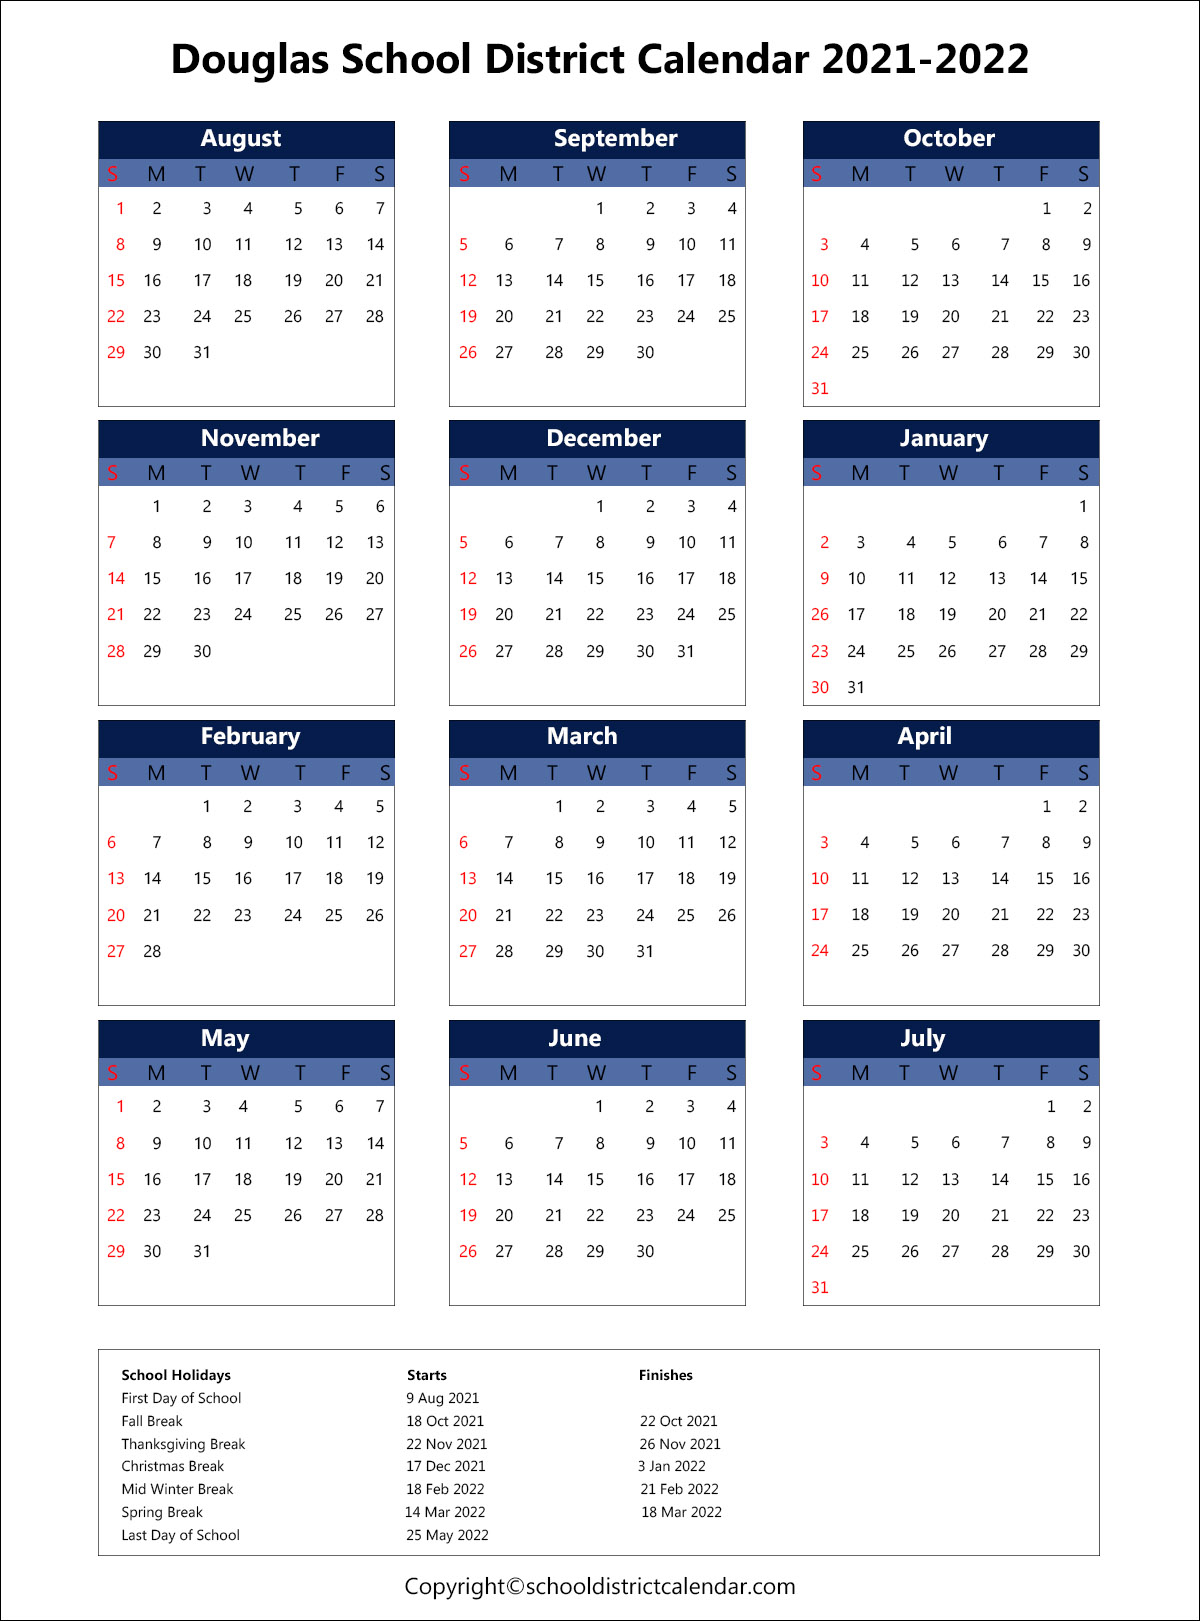 Douglas School District Calendar 2021